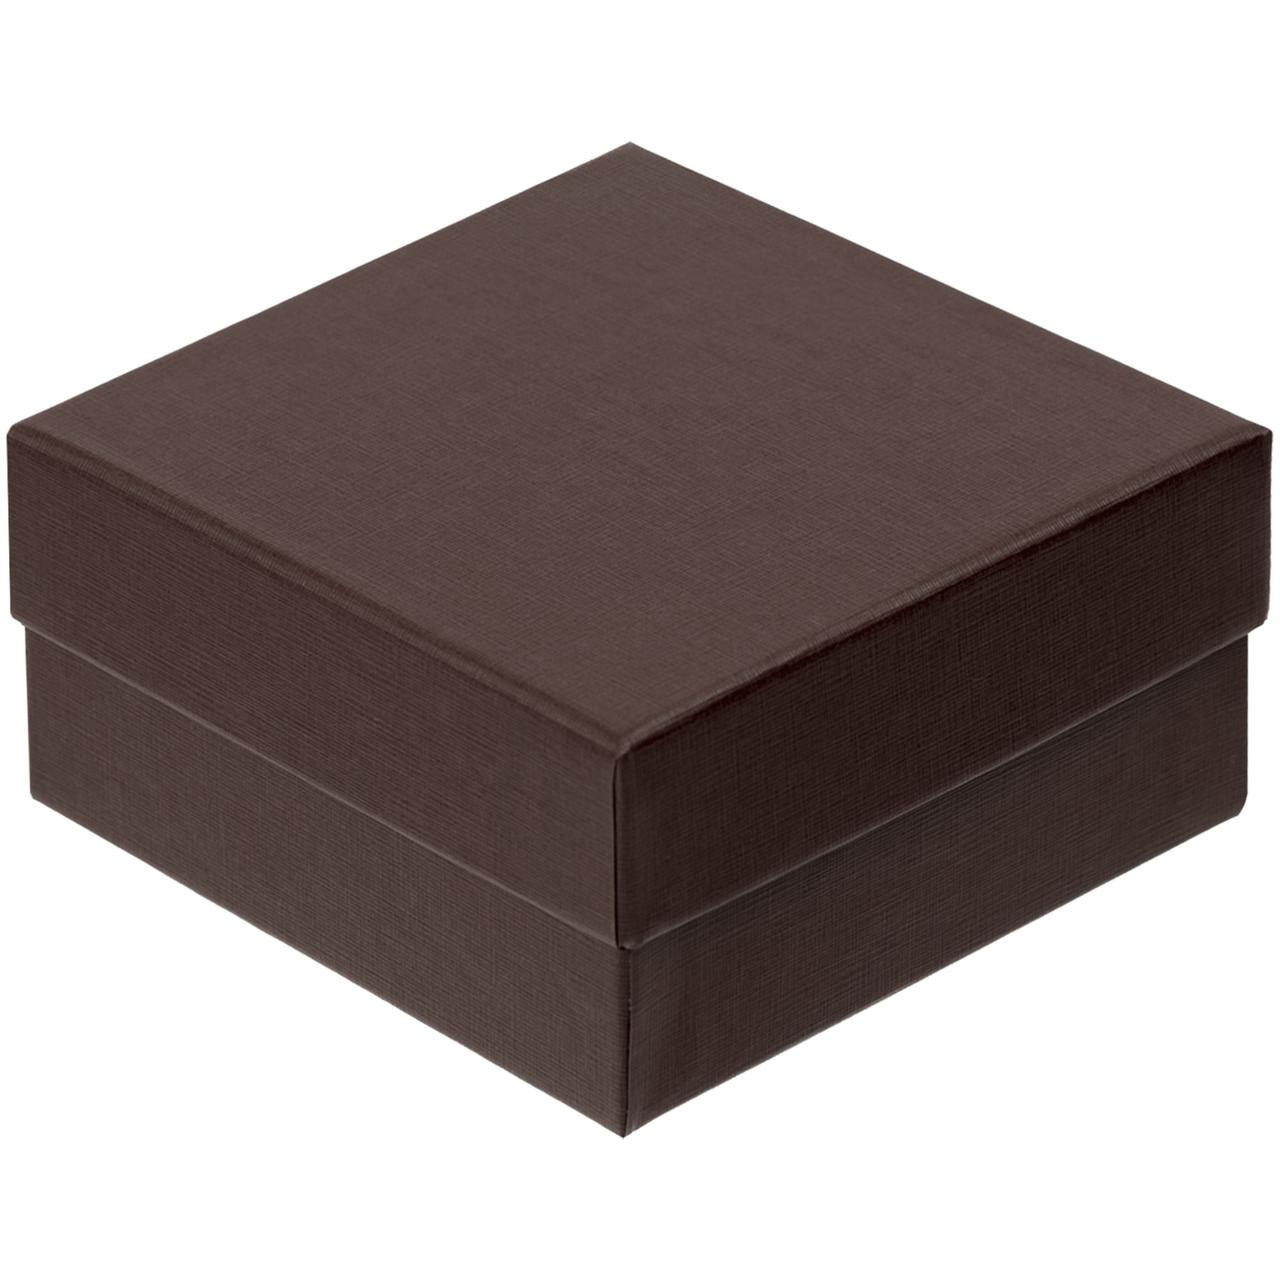 Коробка Emmet, малая, коричневая (артикул 12241.55)